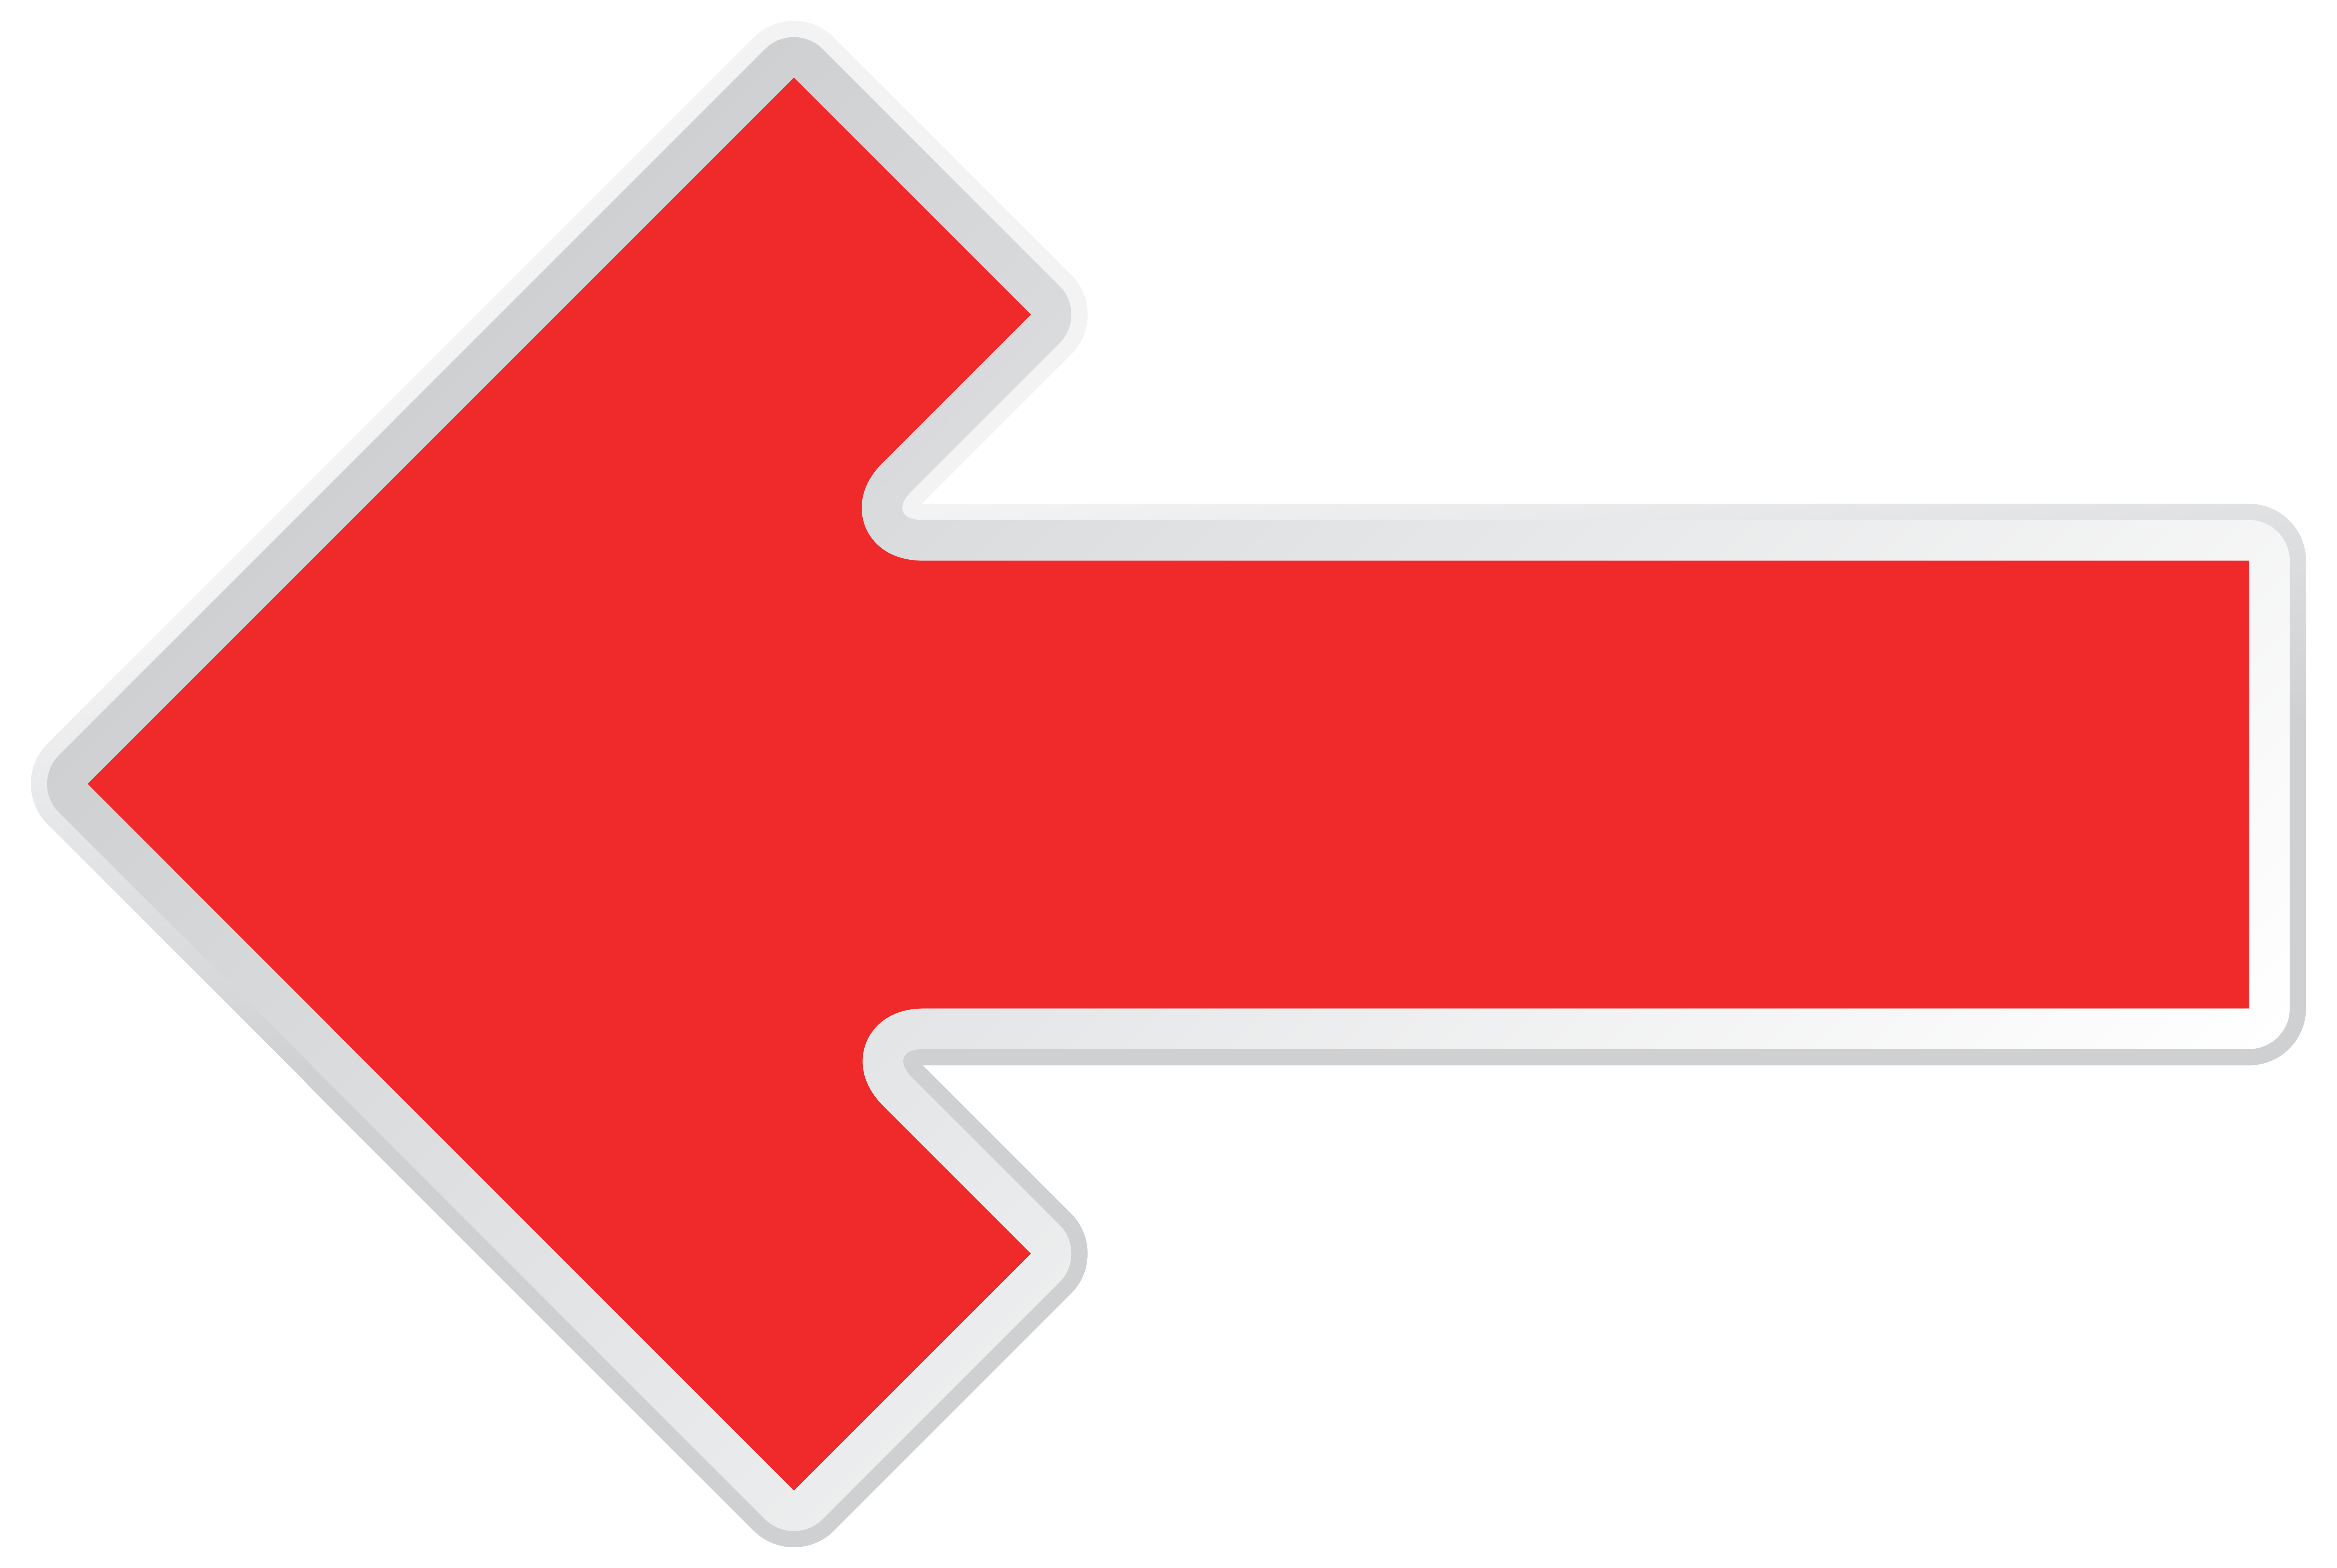 Flecha izquierda roja PNG imagen transparente